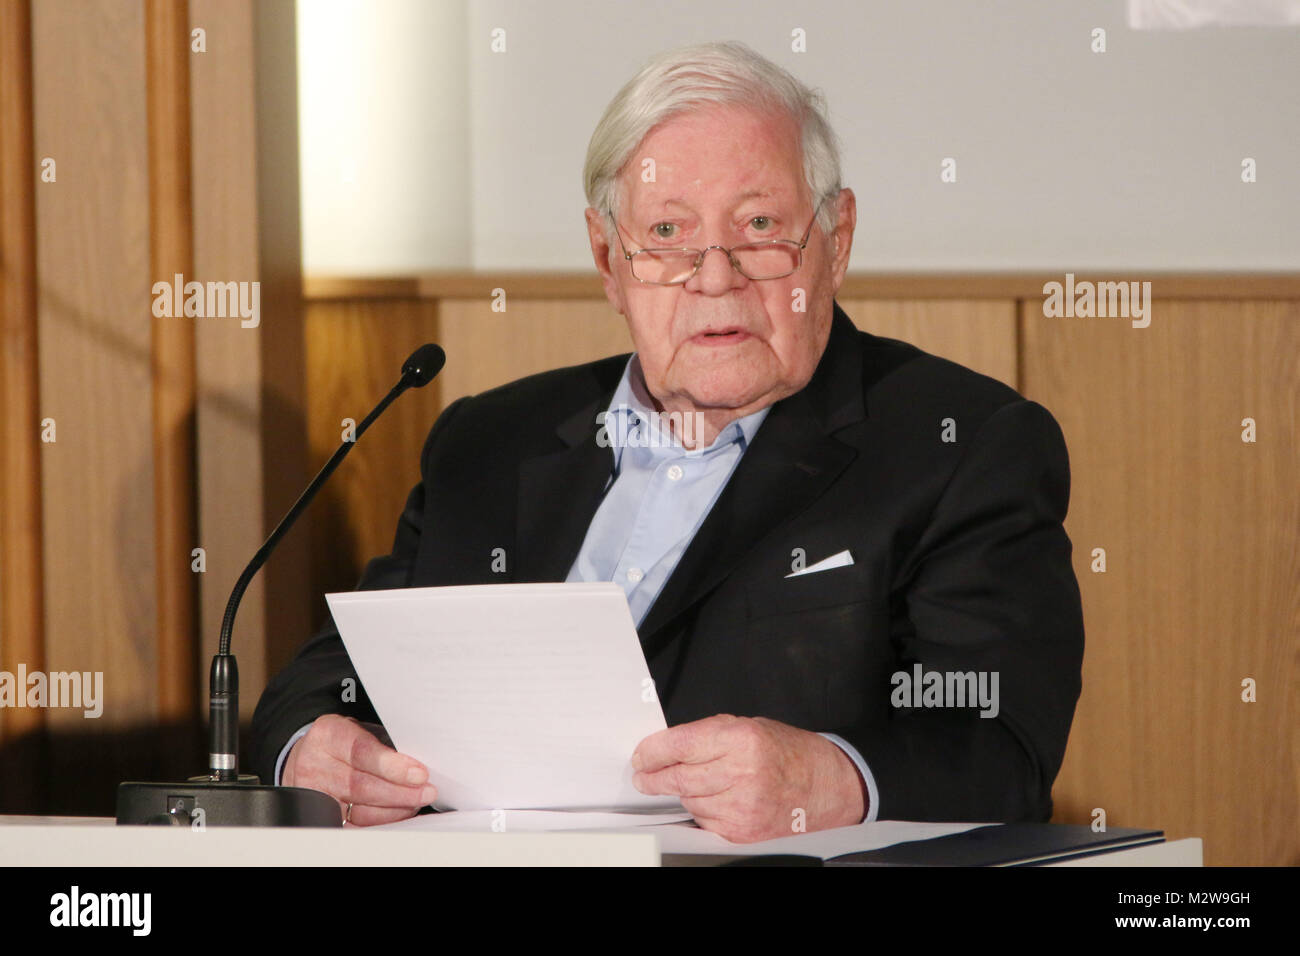 Helmut Schmidt, Verleihung des Gustav-Stresemann-Preises un Bundeskanzler a.D. Helmut Schmidt , A.F.u.A.M Freimaurer Grossloge c. Deutschland, Hambourg, 26.01.2015 Banque D'Images